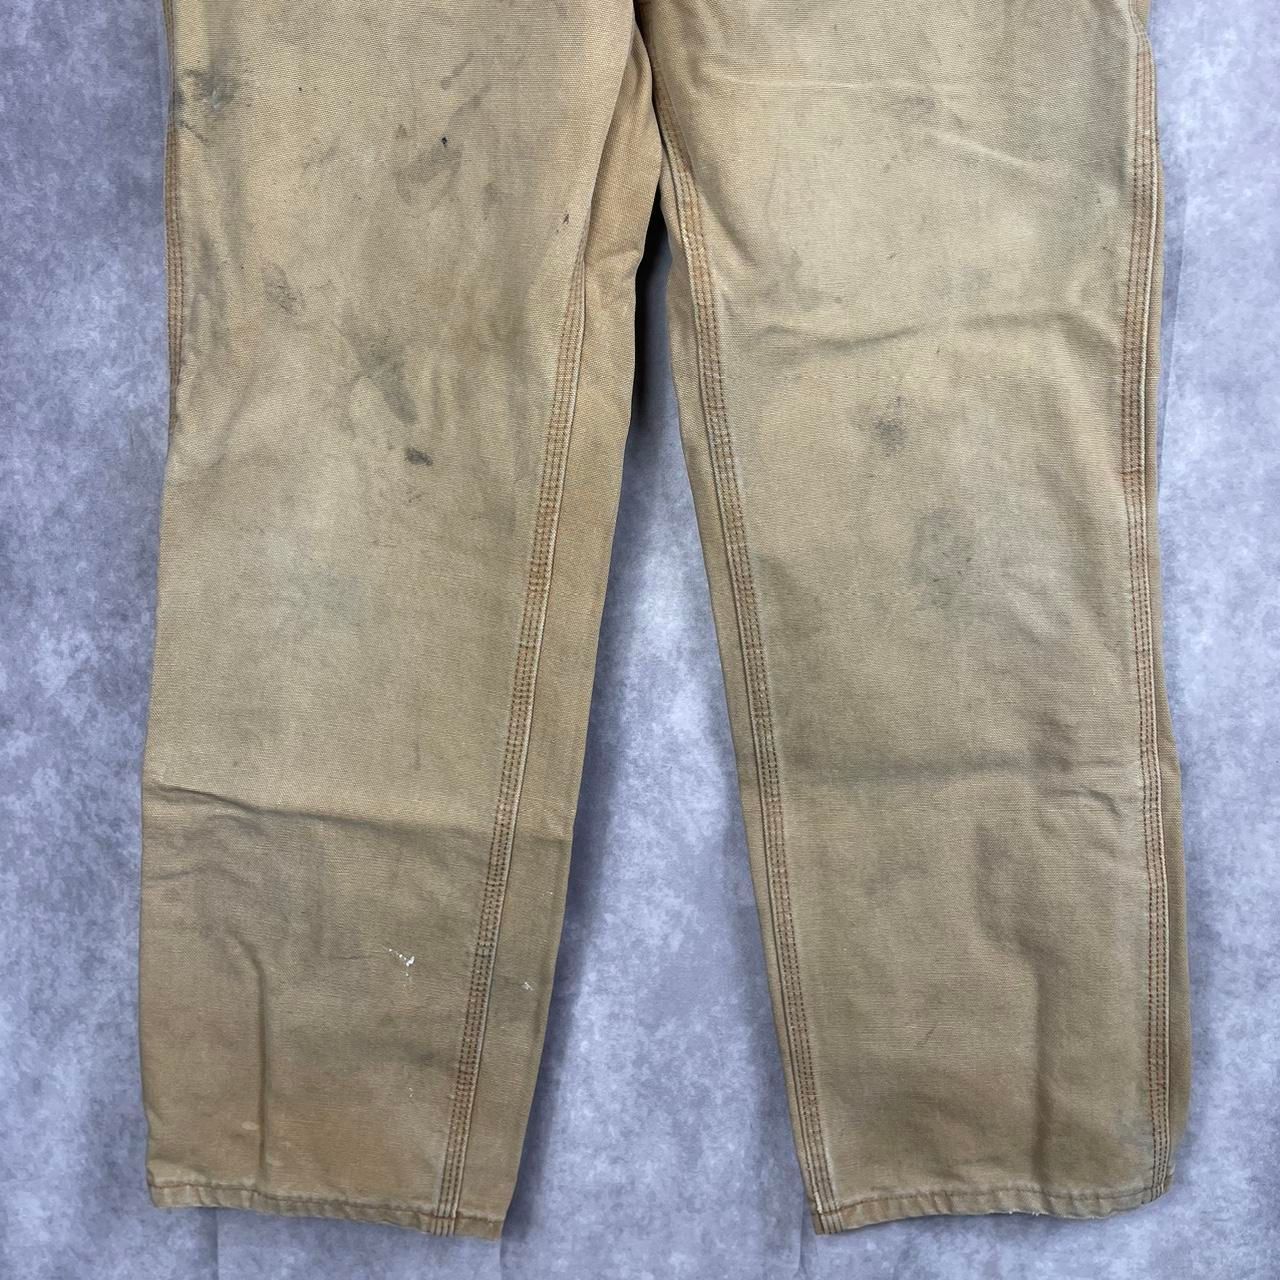 Carhartt Carhartt Dungaree Fit Carpenter Pants Size US 31 - 5 Thumbnail